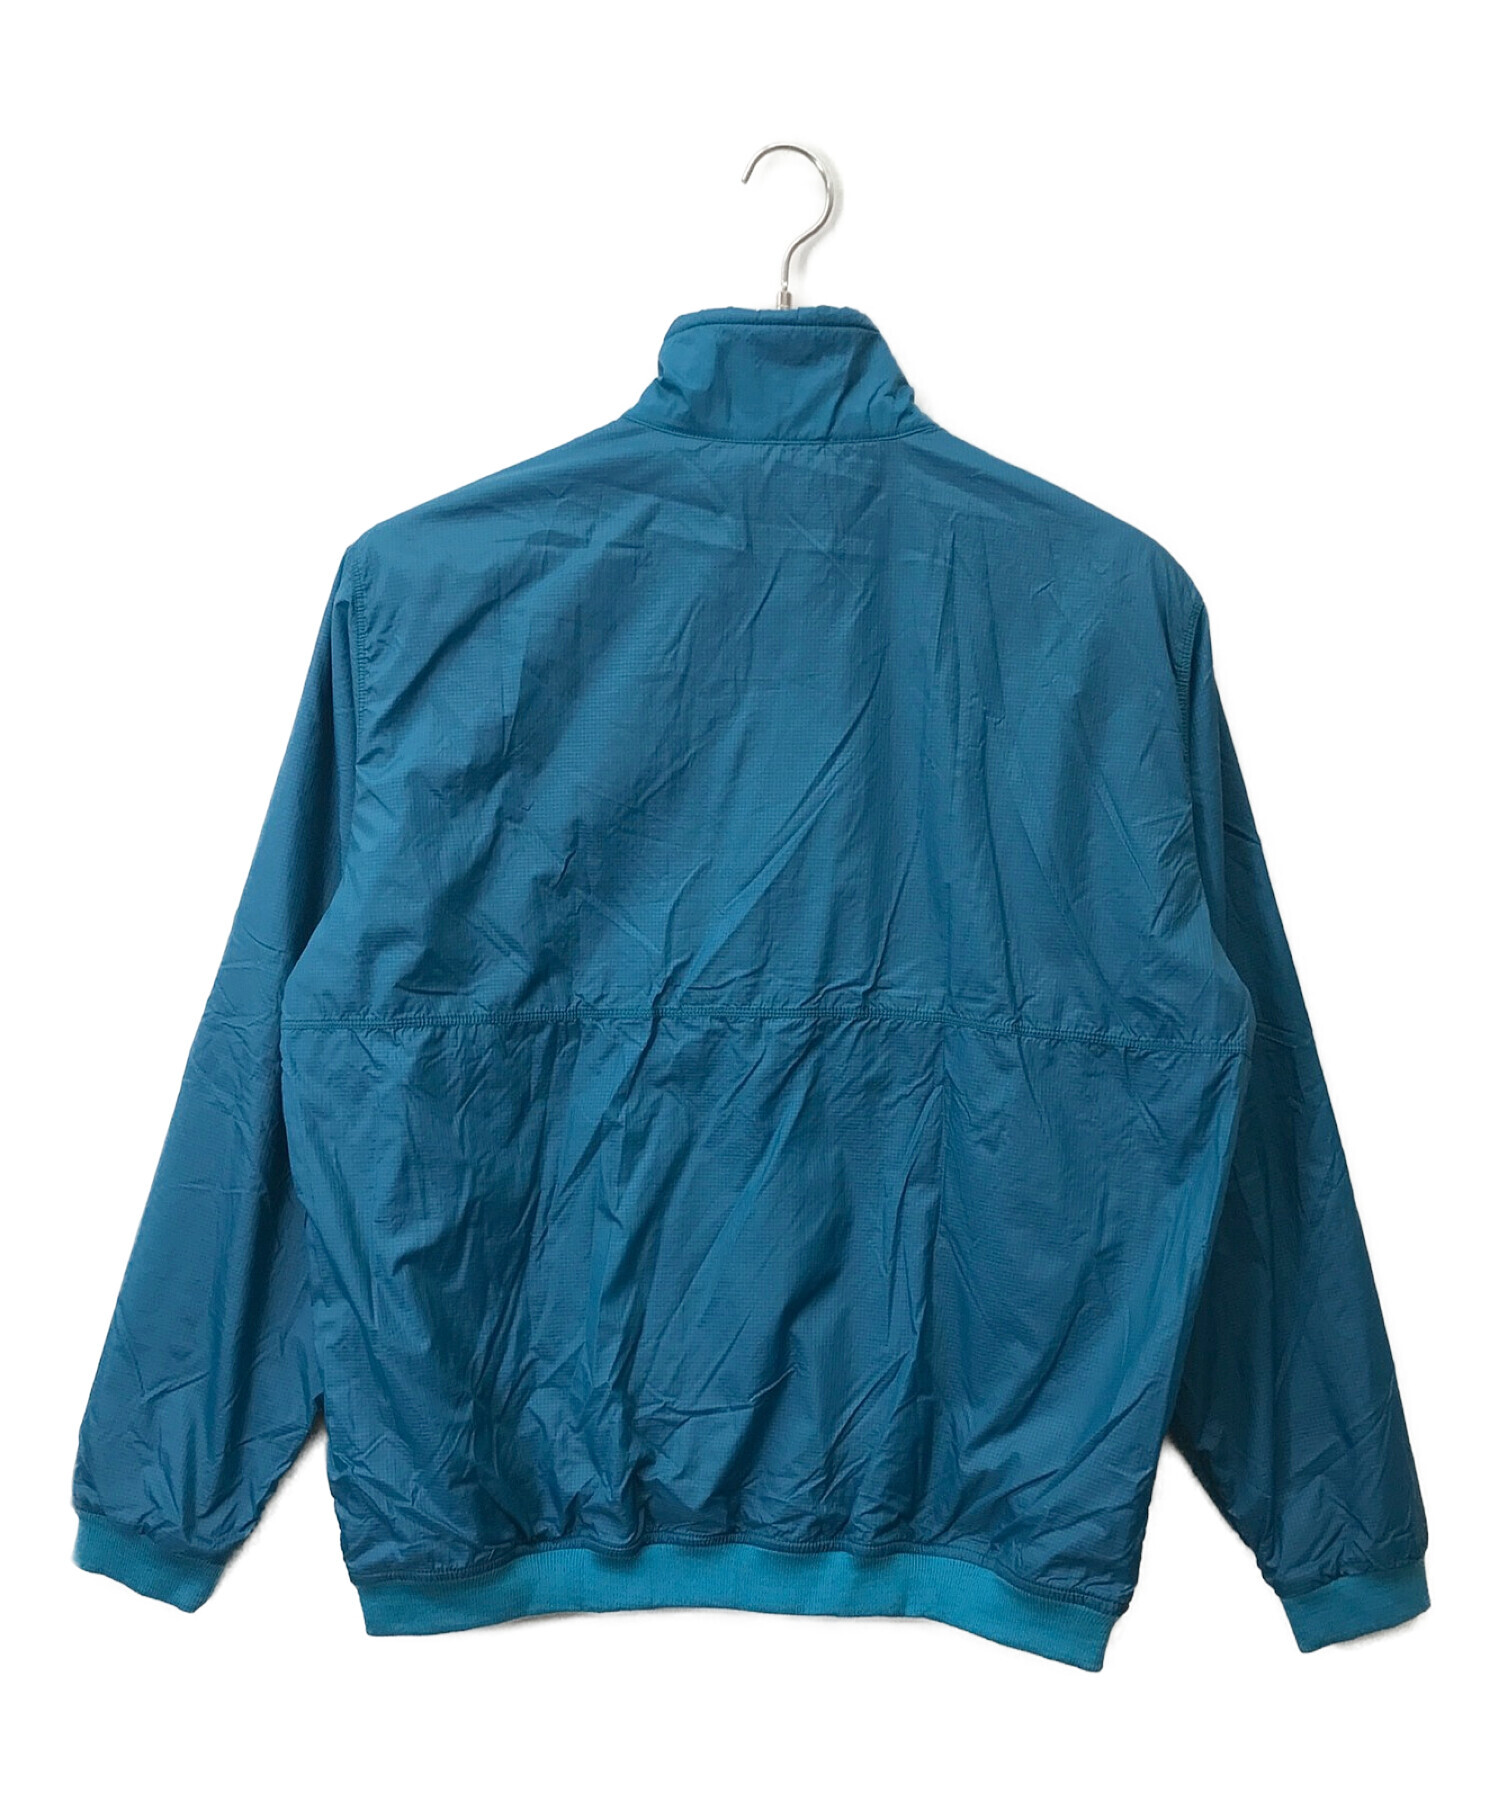 Patagonia (パタゴニア) リバーシブルシェルドマイクロディニジャケット ブルー サイズ:L